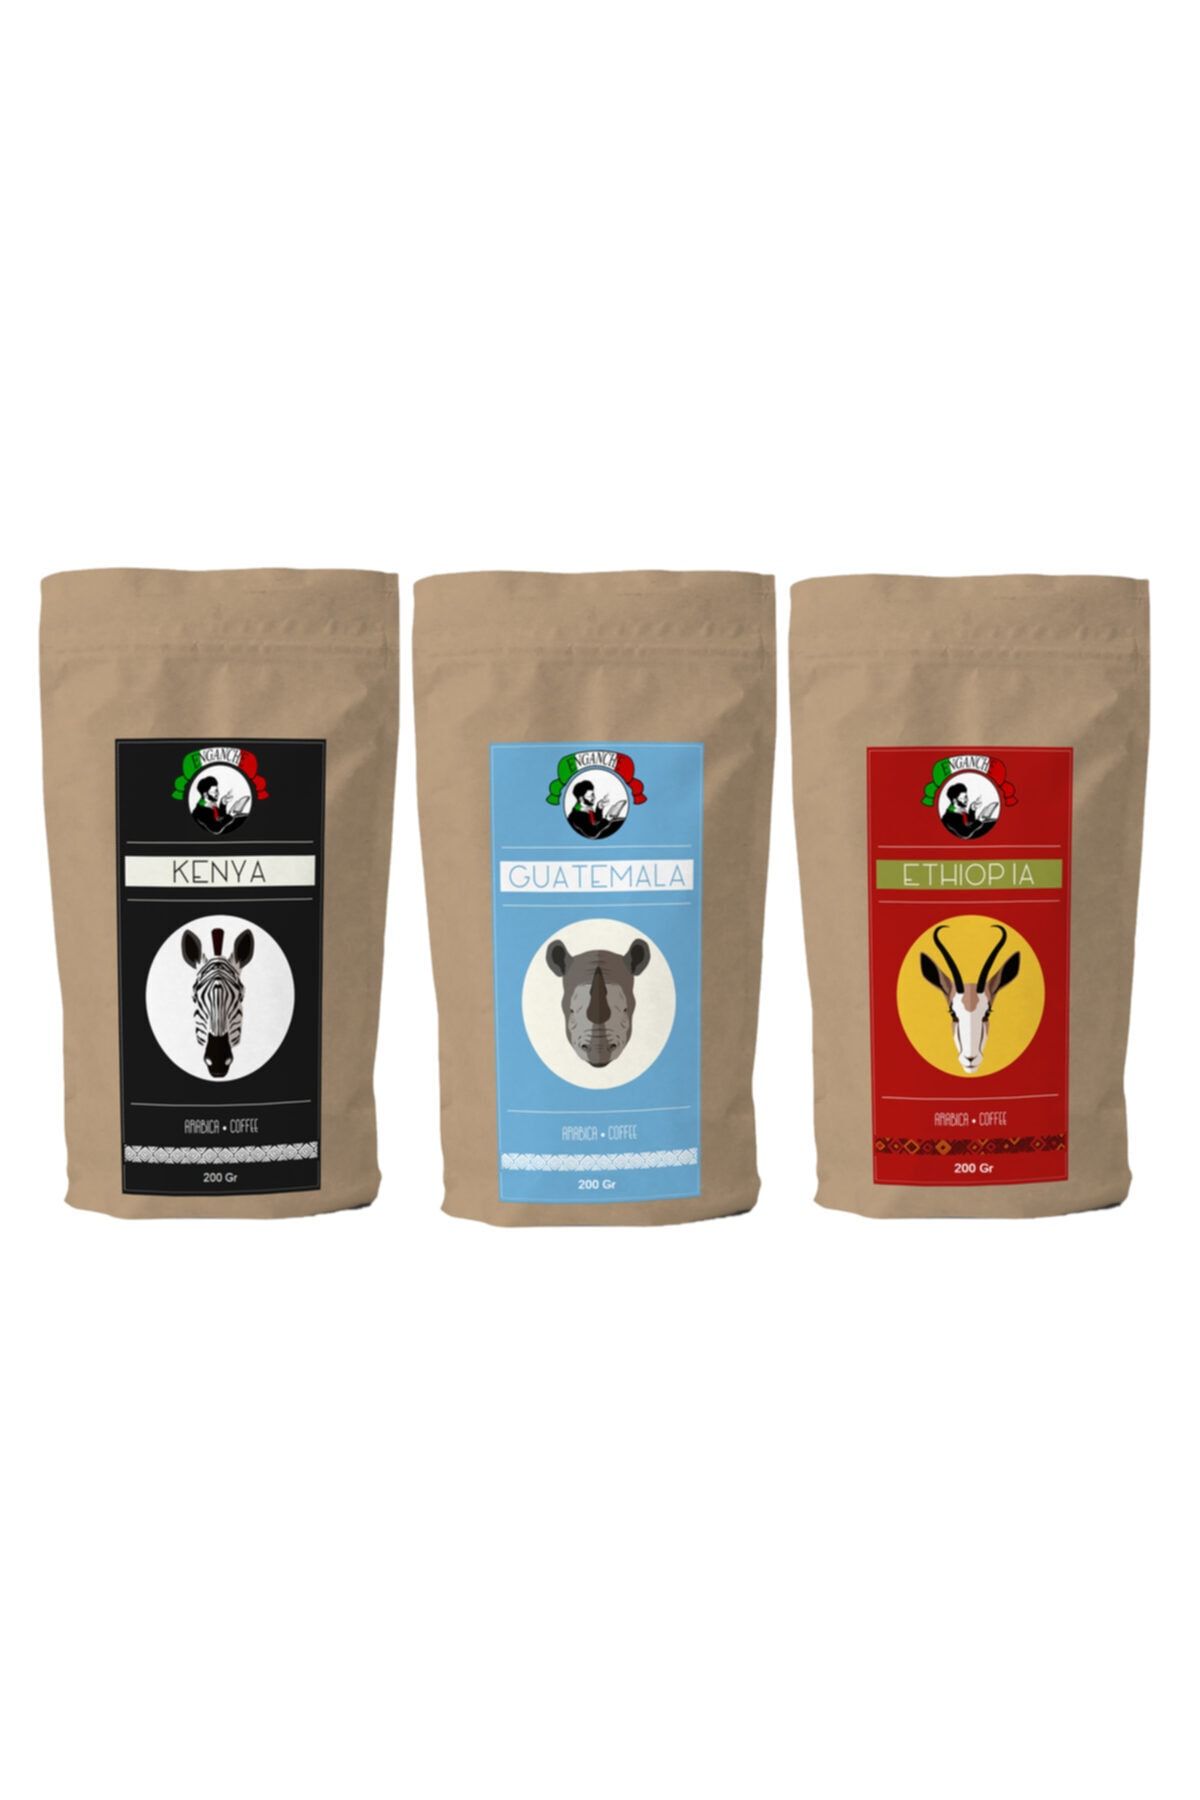 Enganche Coffee Fırsat Paketi Etiyopya & Guatemala & Kenya 3x200 Gram Filtre Kahve